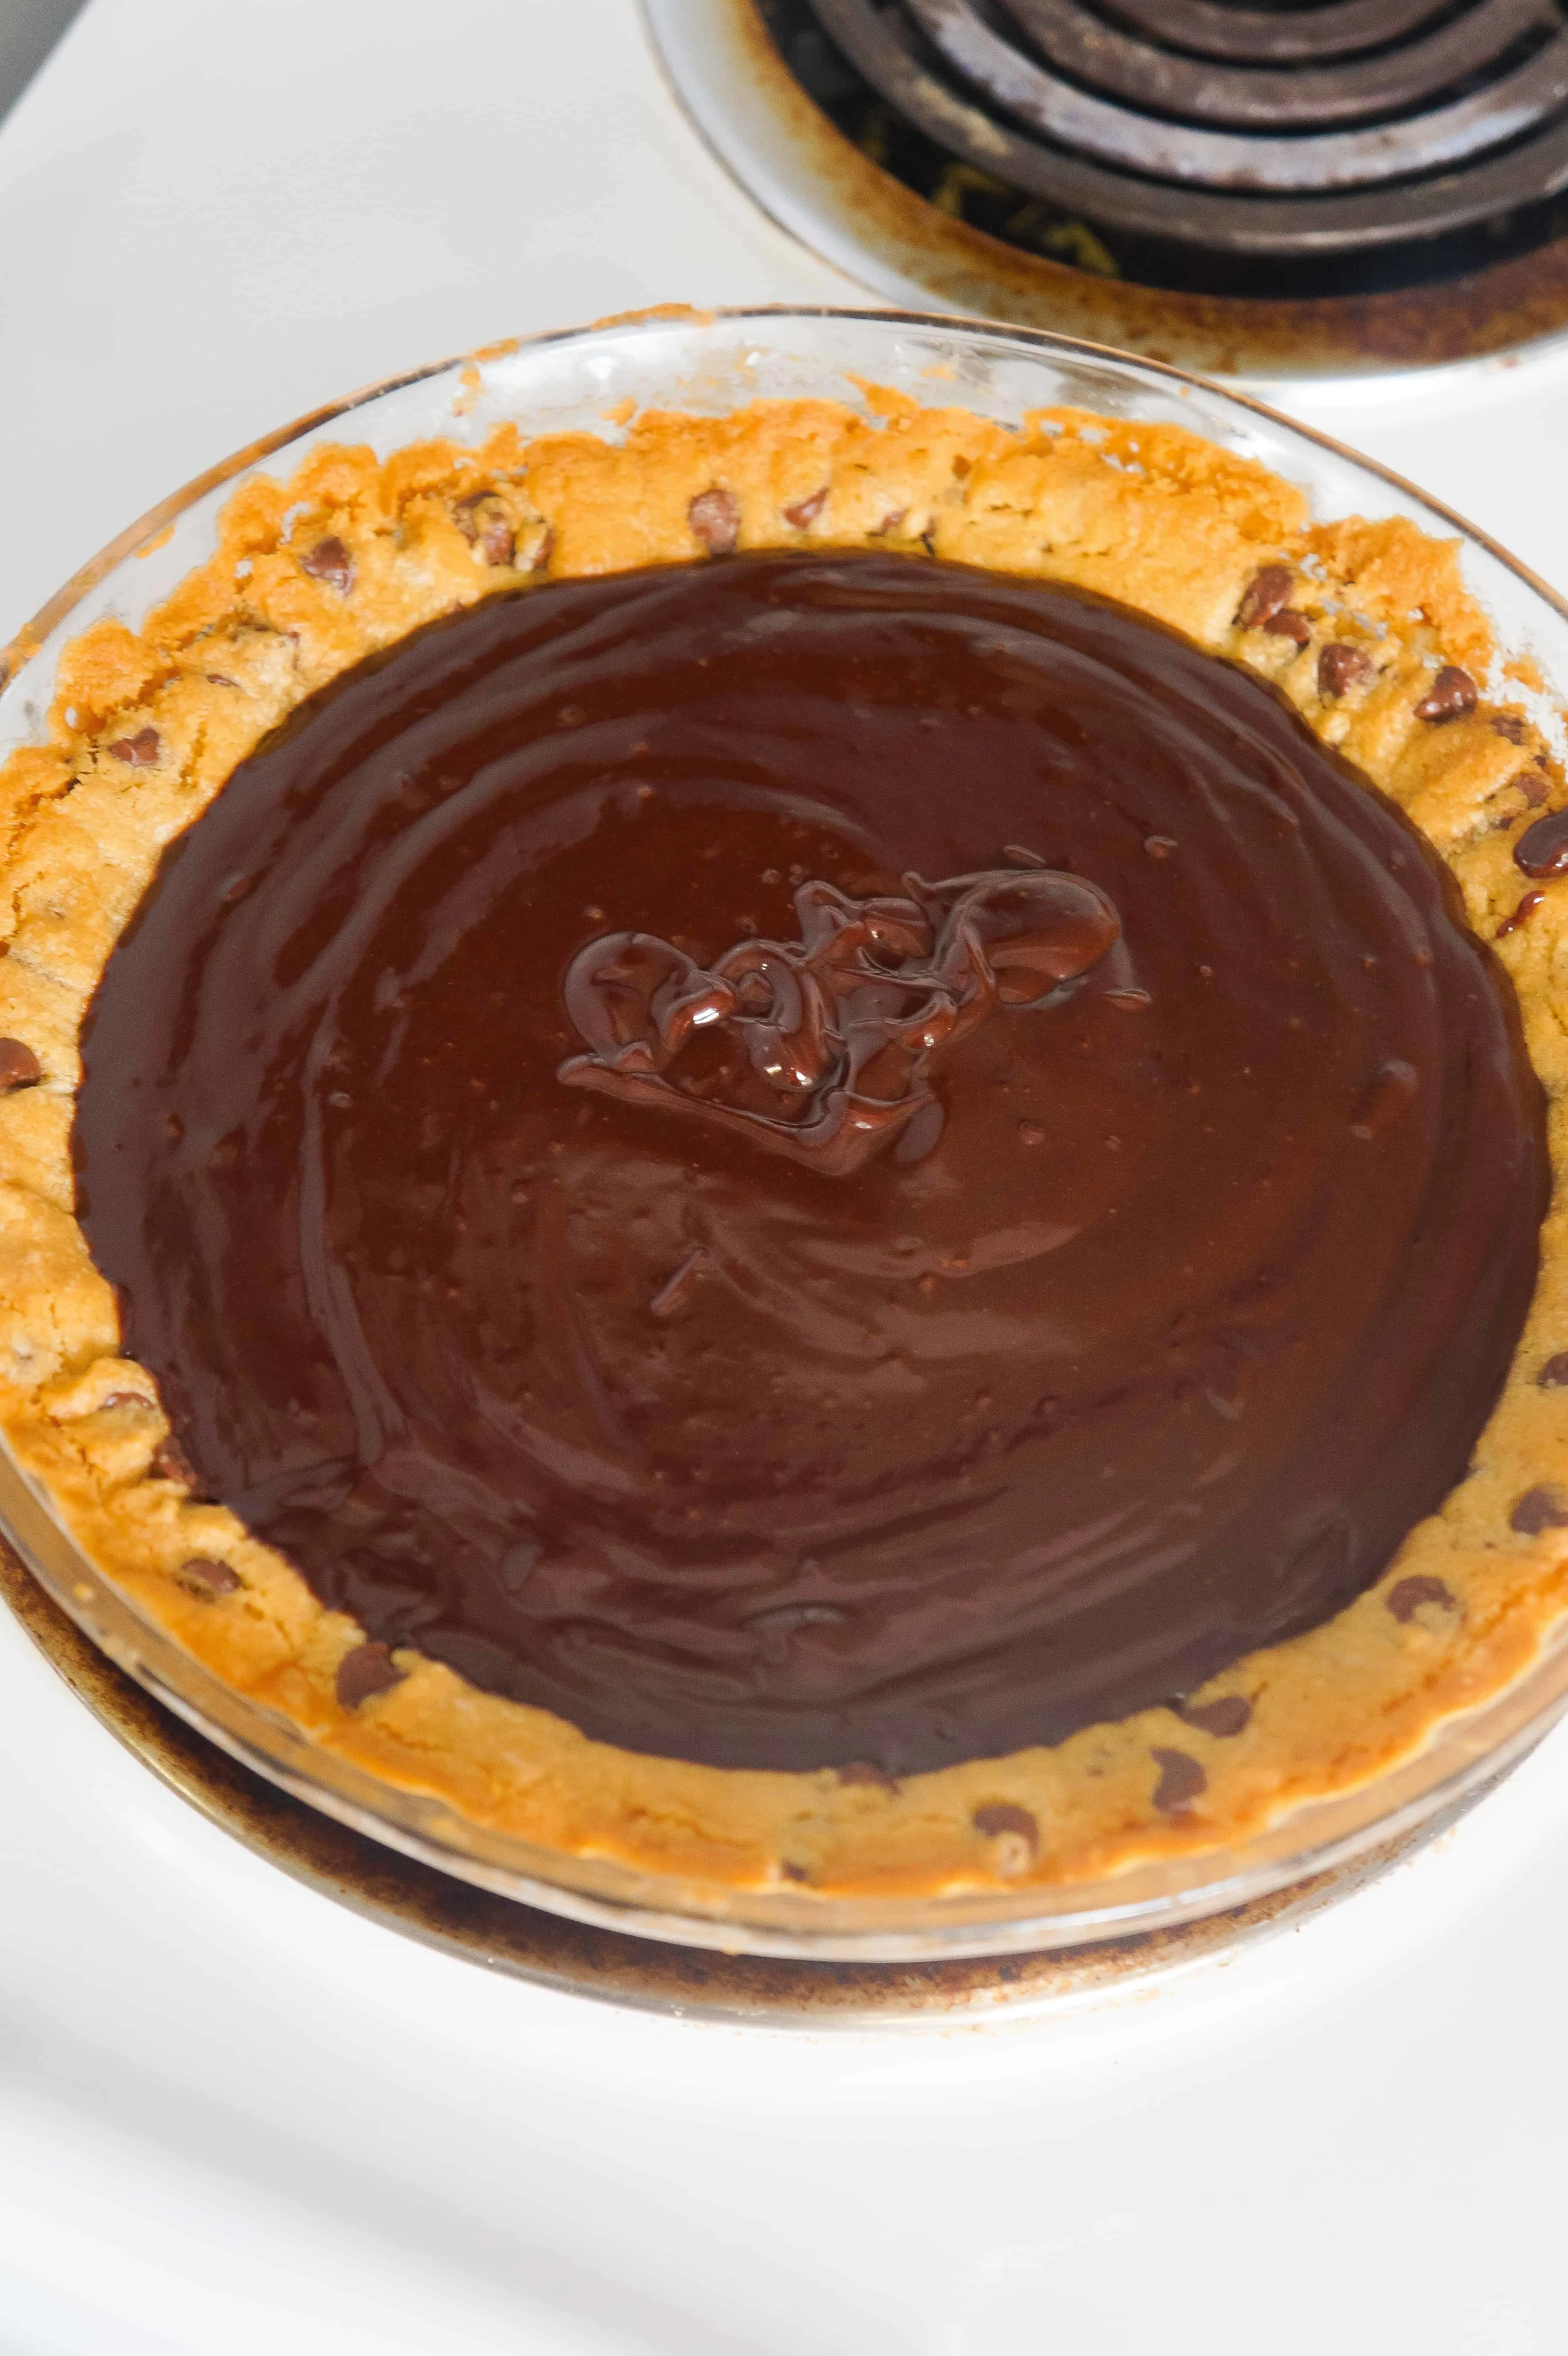 Creamy chocolate ganache in a chocolate chip cookie pie crust.